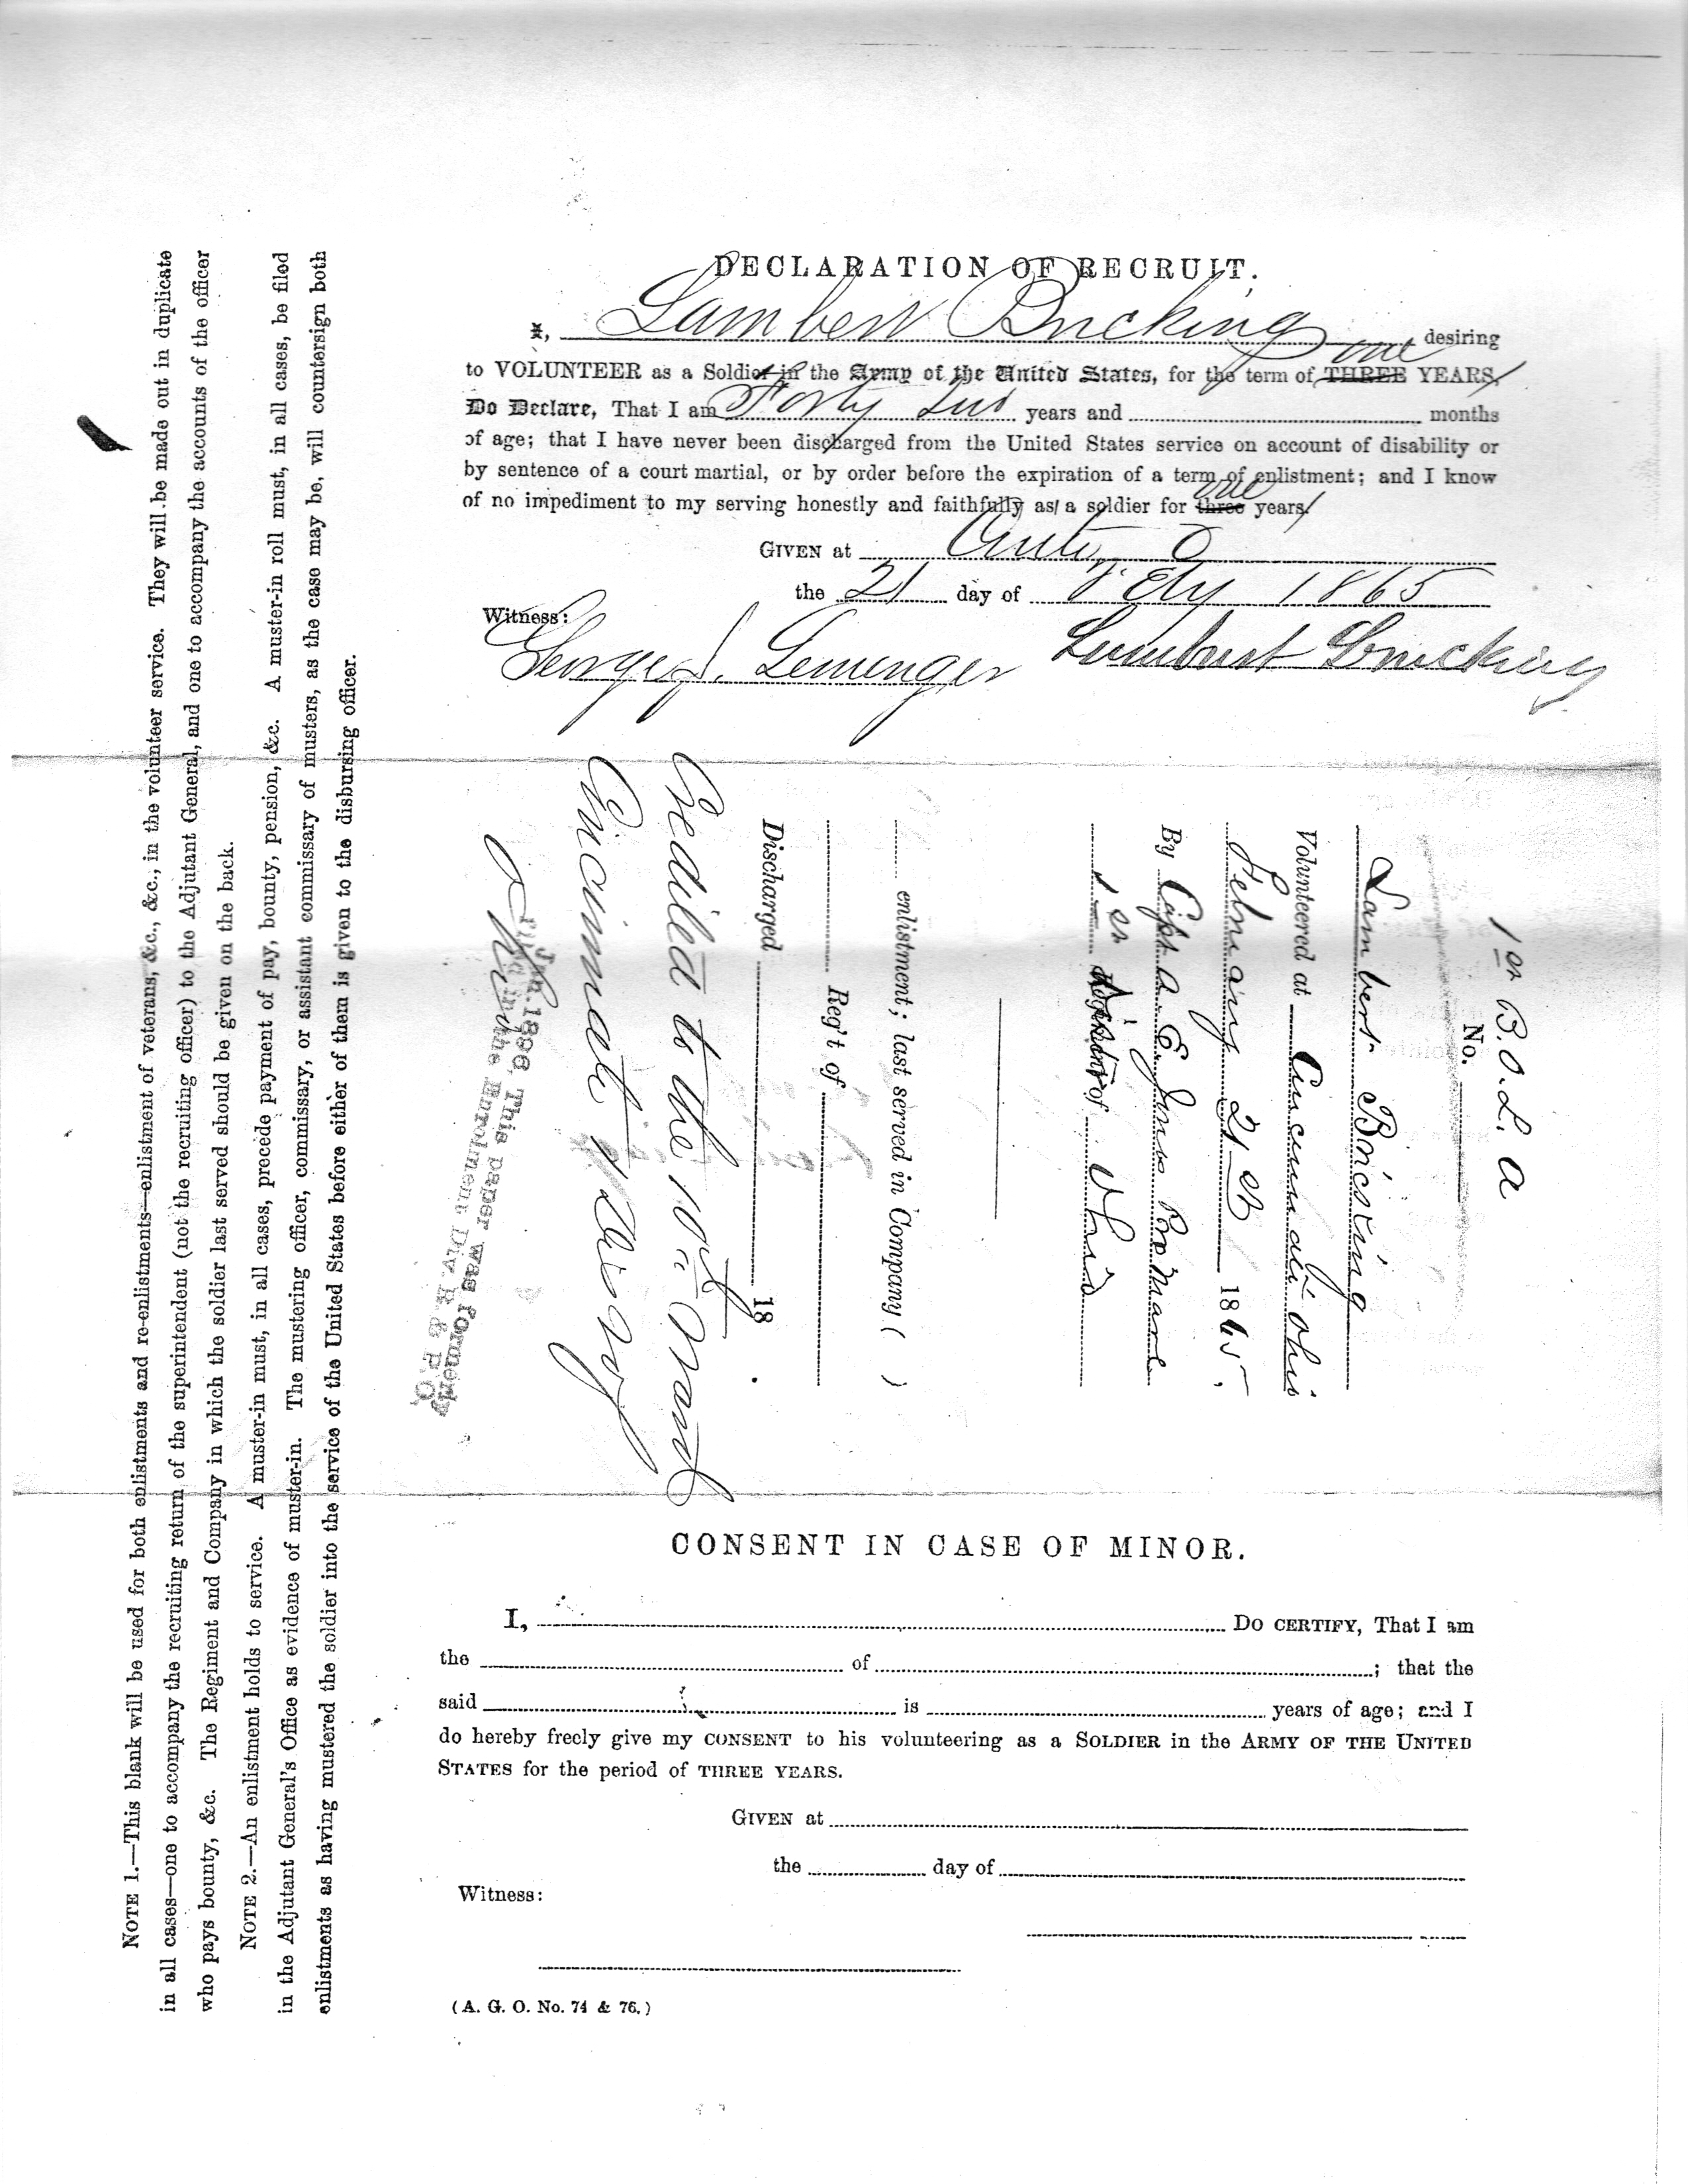 1865 Lambert Bricking Declaration of Recruit